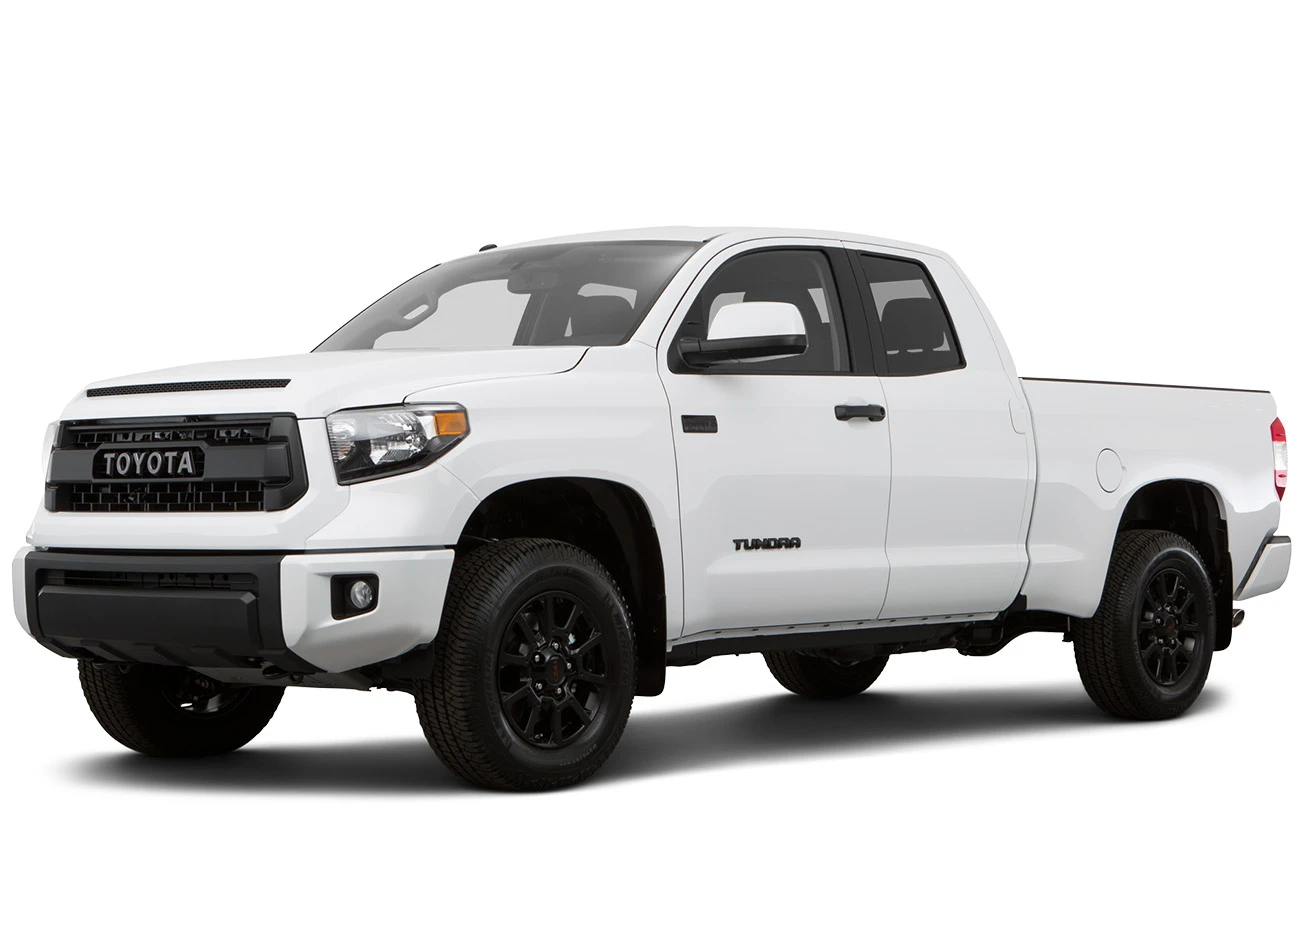 2015 Toyota Tundra: Side profile of truck | CarMax